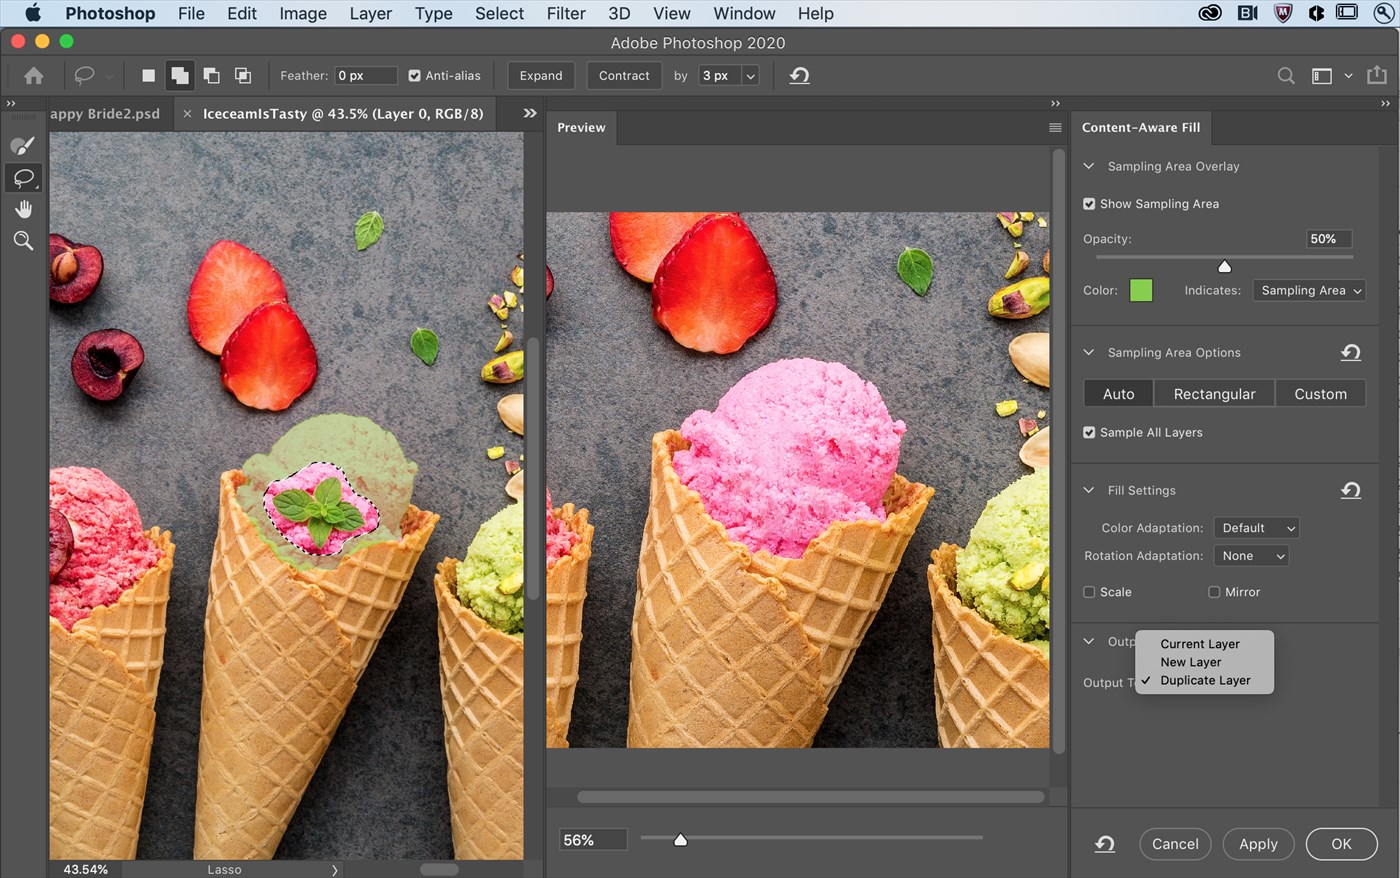 ｢Adobe Photoshop｣が生誕30周年 － デスクトップ版とiPad版の機能強化アップデートを提供